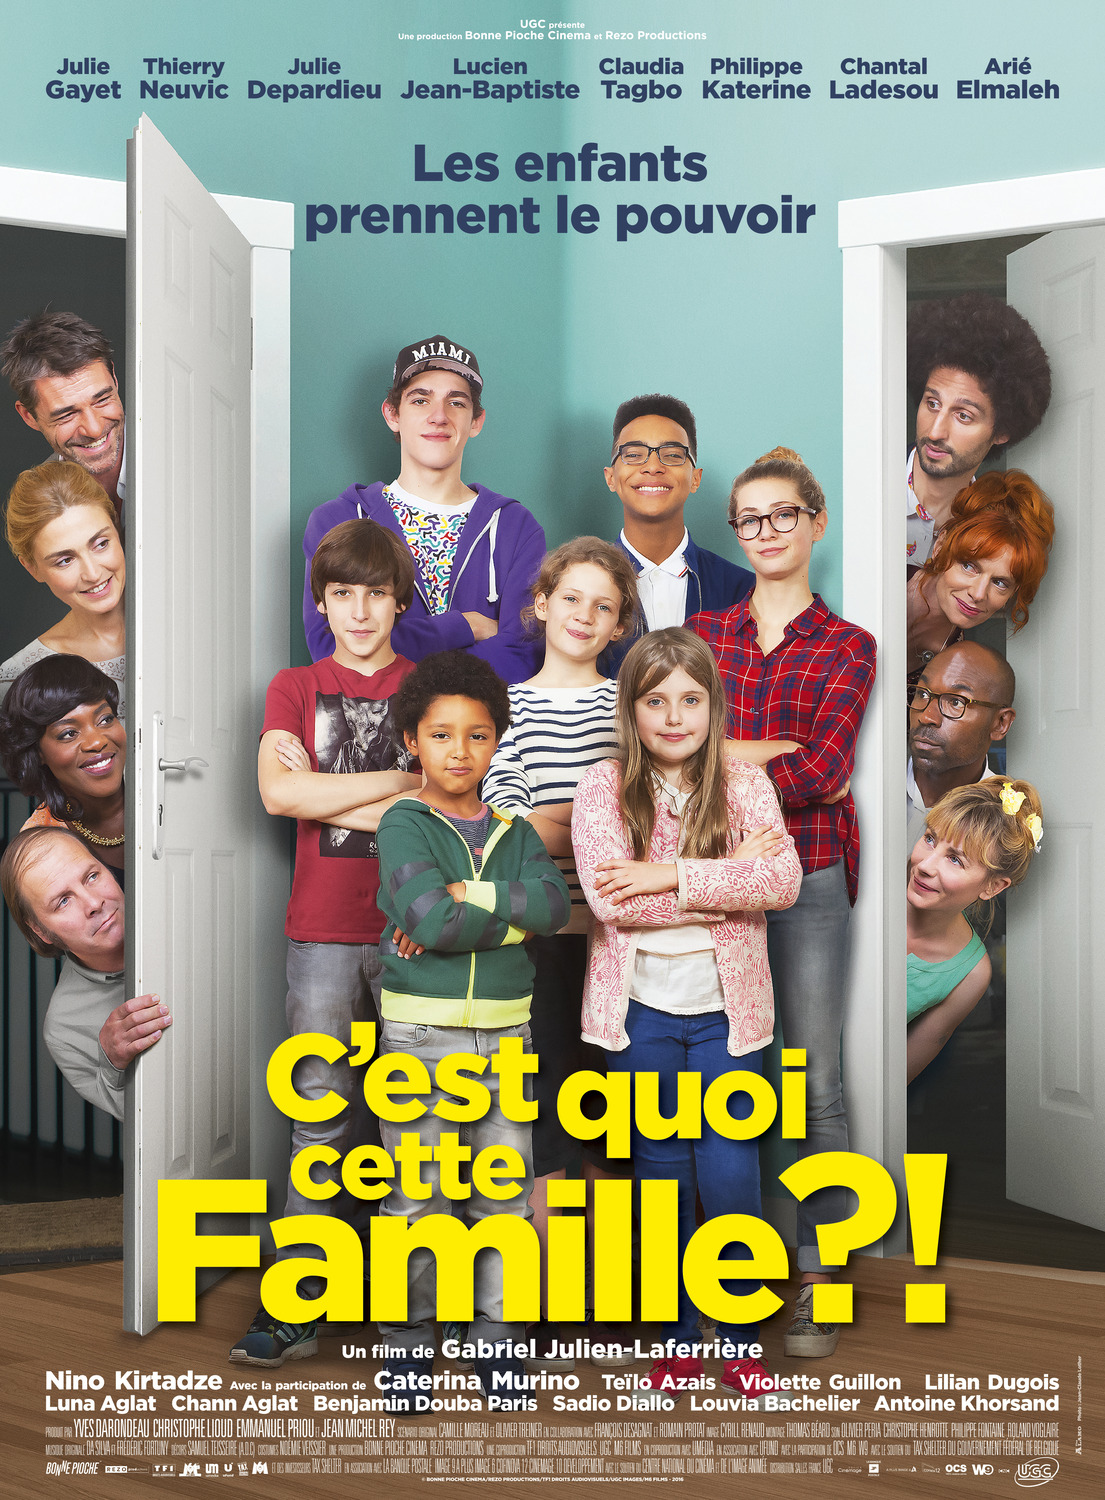 Extra Large Movie Poster Image for C'est quoi cette famille?! 